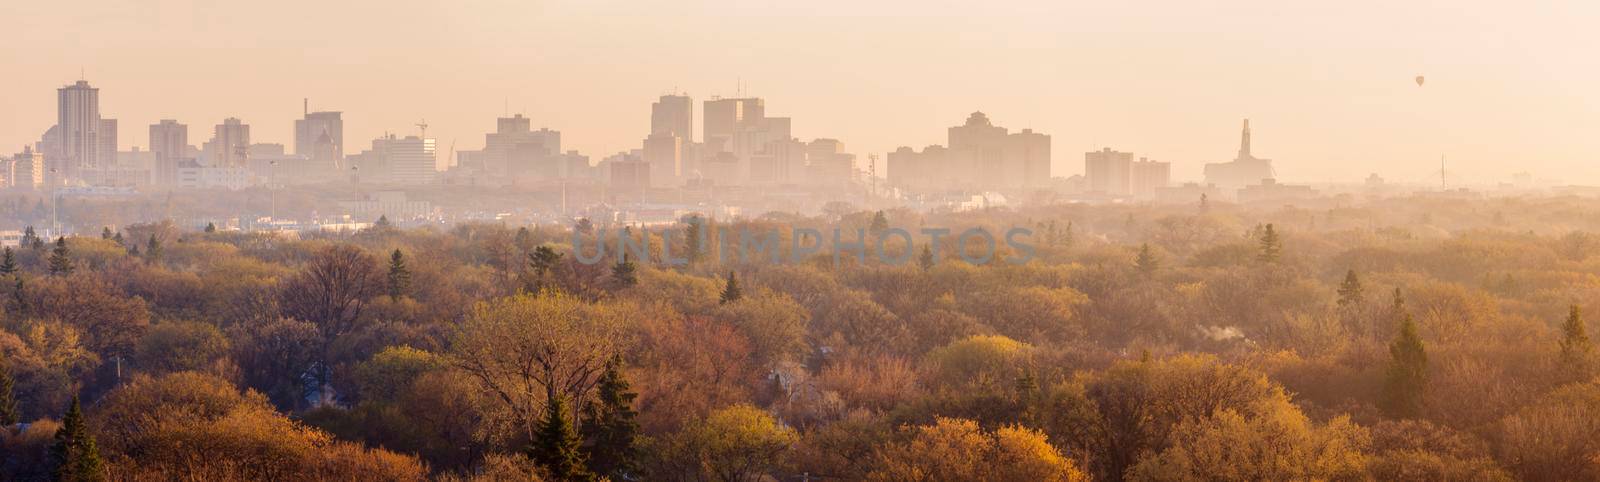 Winnipeg panorama at sunrise  by benkrut